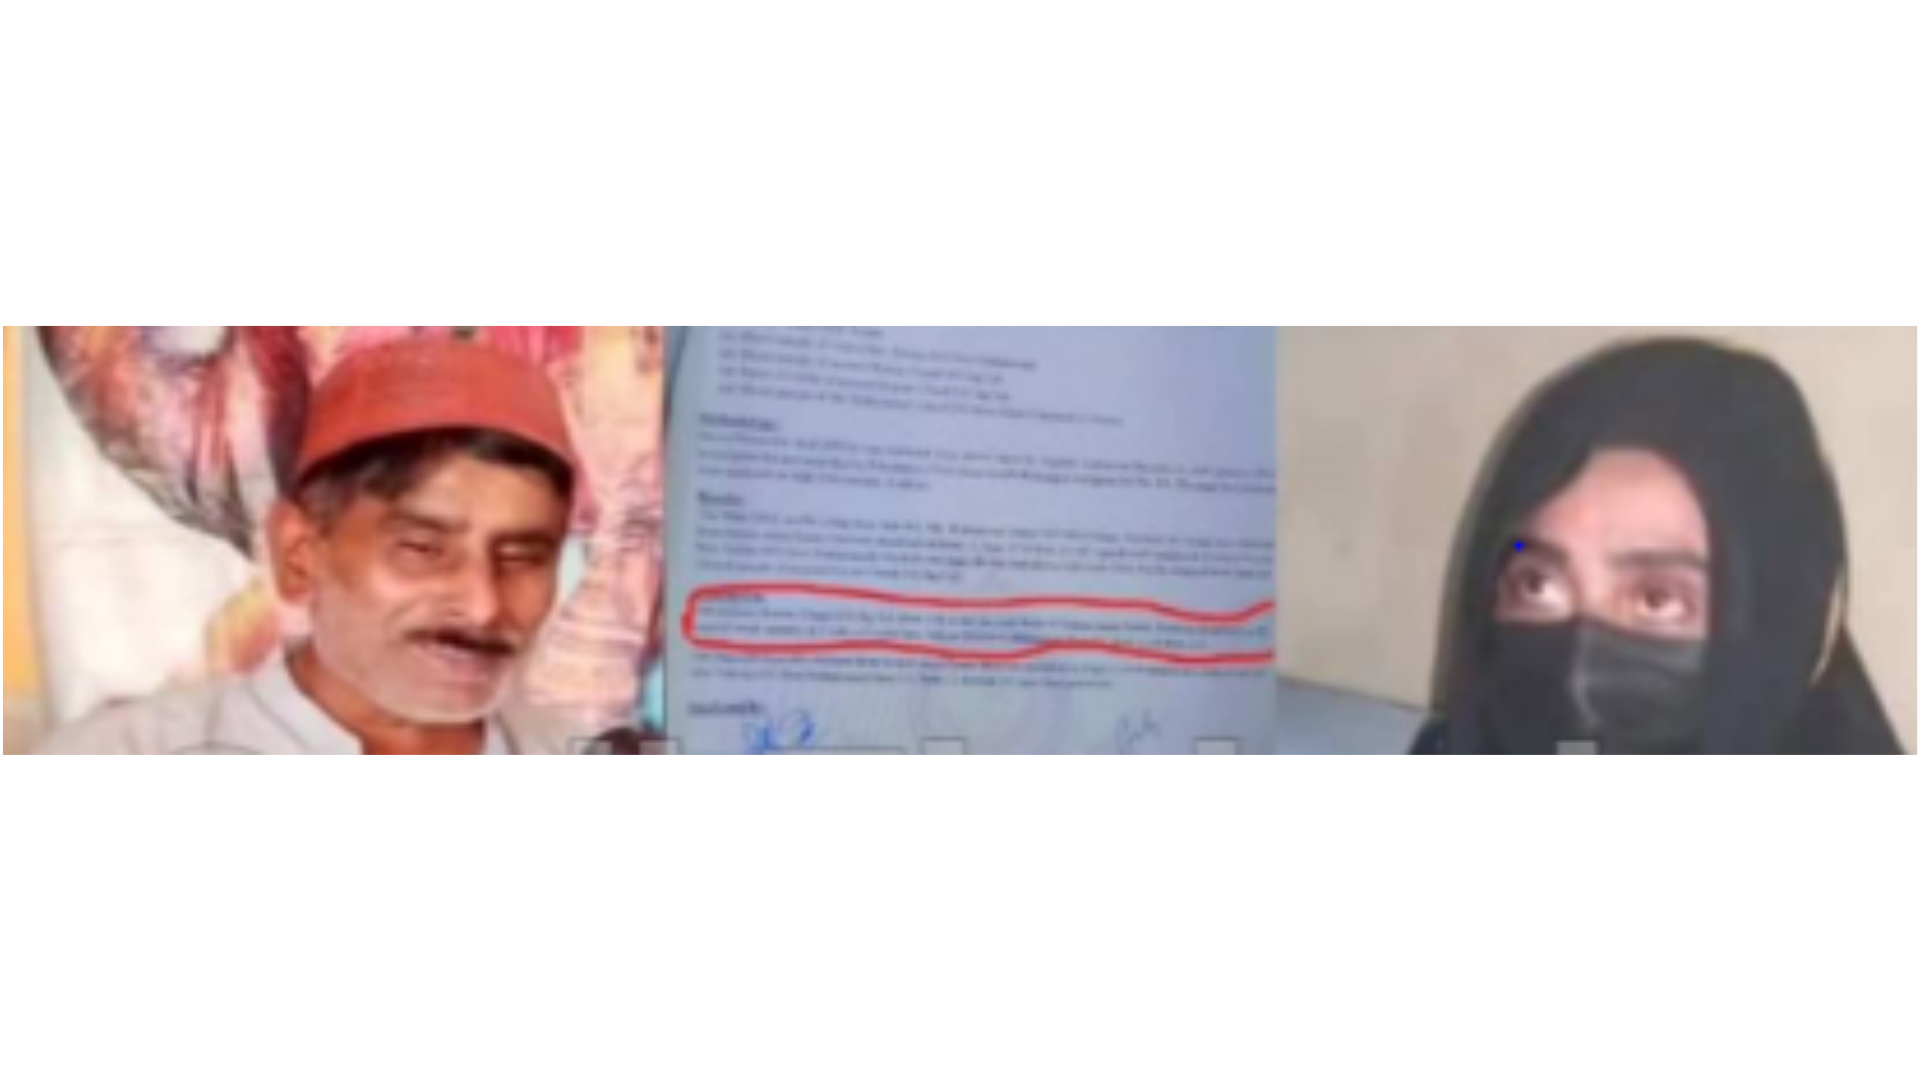 Allegations of Rape Case in Hyderabad’s Shiv Mandir Proven False in DNA Report